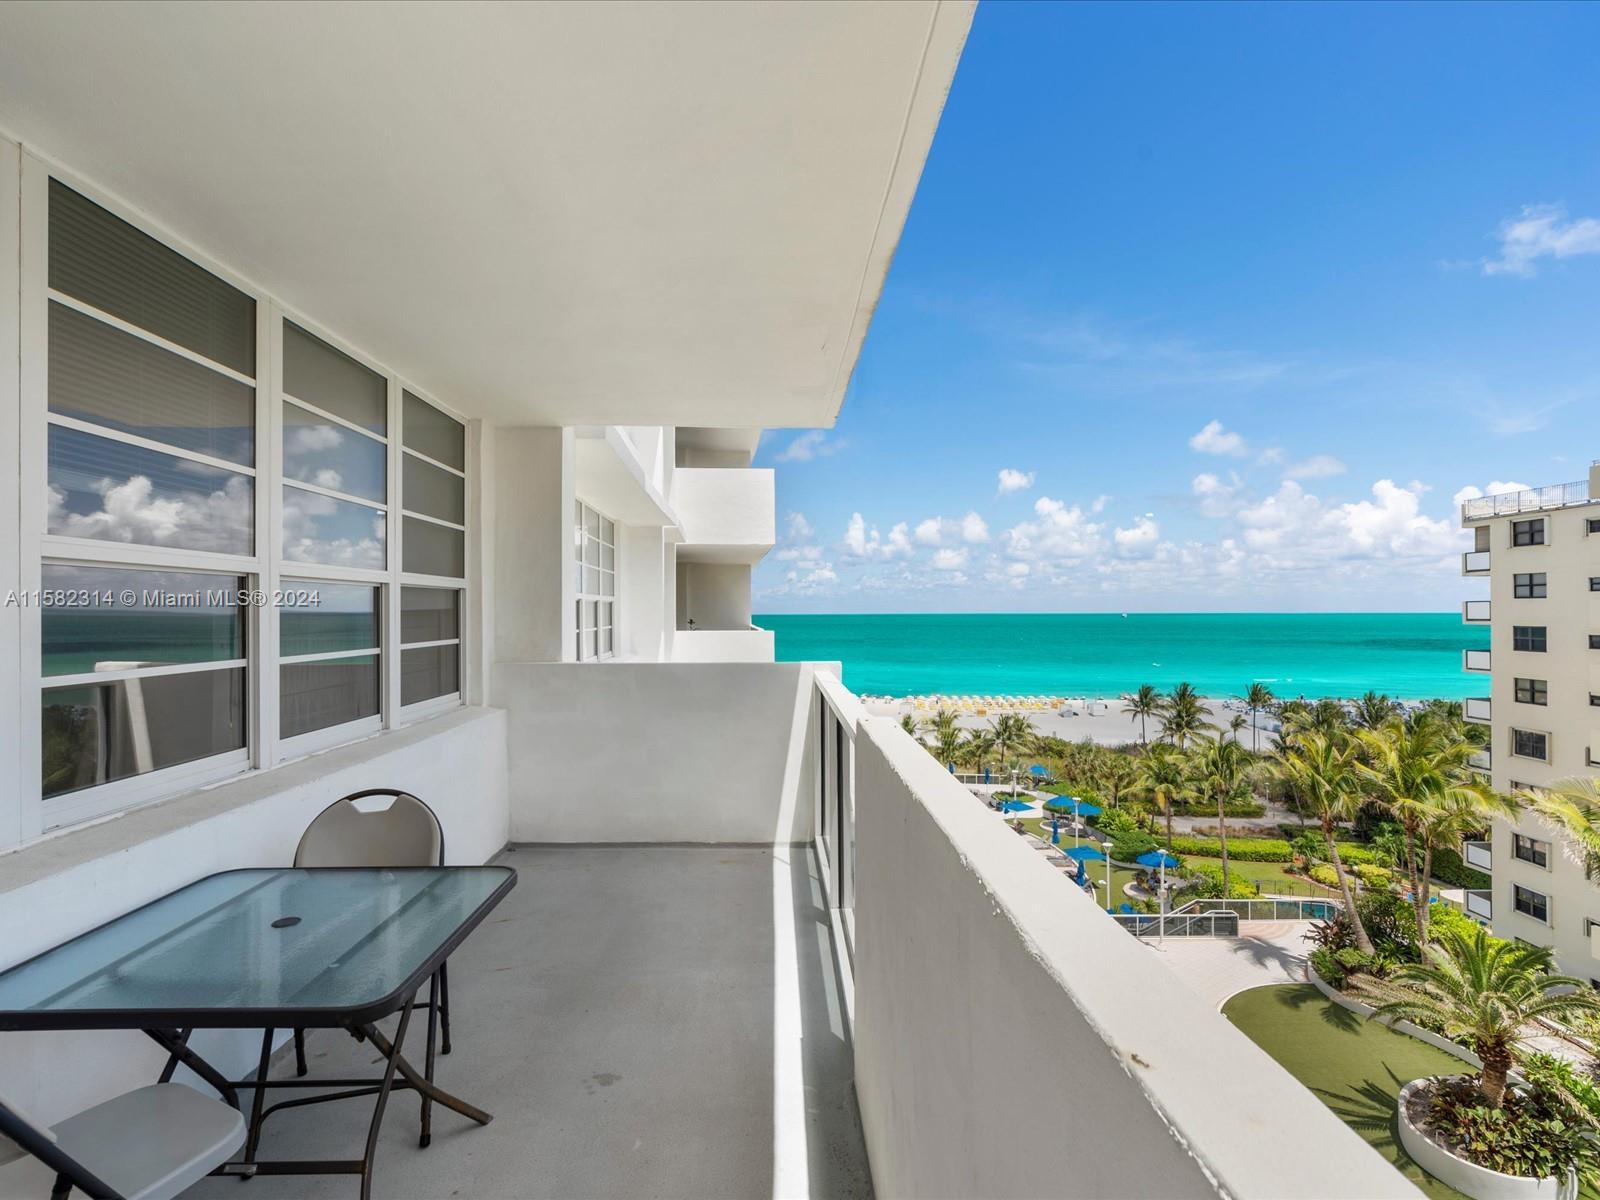 Property for Sale at 100 Lincoln Rd 830, Miami Beach, Miami-Dade County, Florida - Bedrooms: 1 
Bathrooms: 1  - $487,000